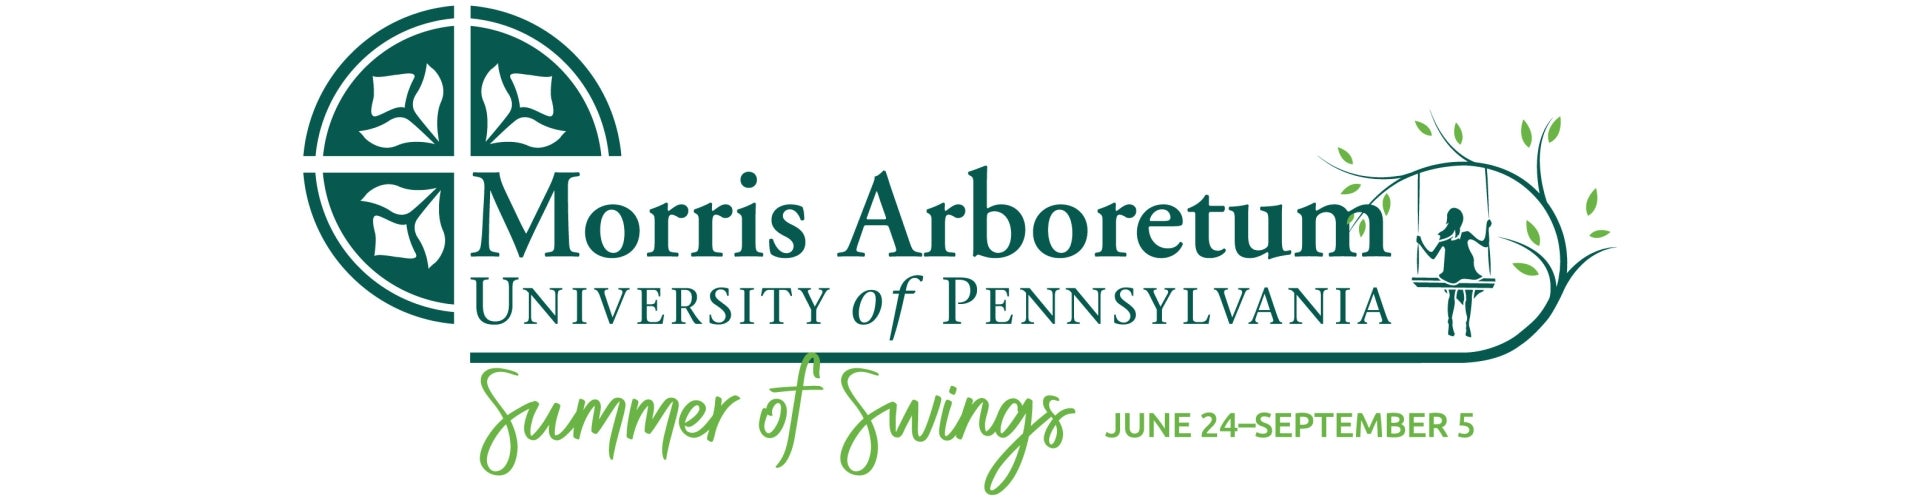 Morris Arboretum Summer of Swings logo